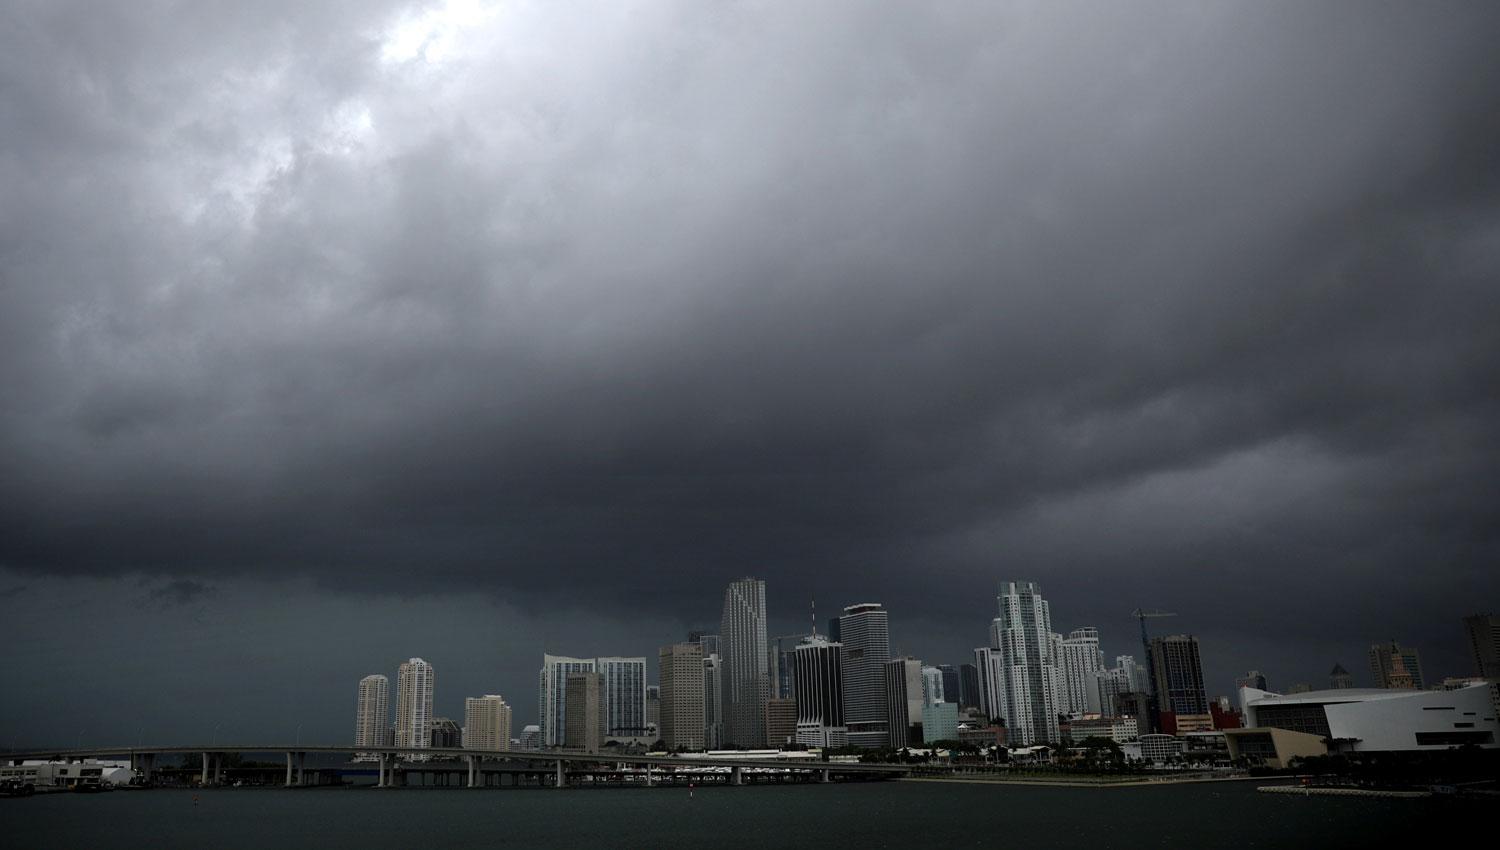 ASÍ AMANECIÓ MIAMI. Las nubes negras cubren la ciudad estadounidense que espera la llegada de Irma. REUTERS